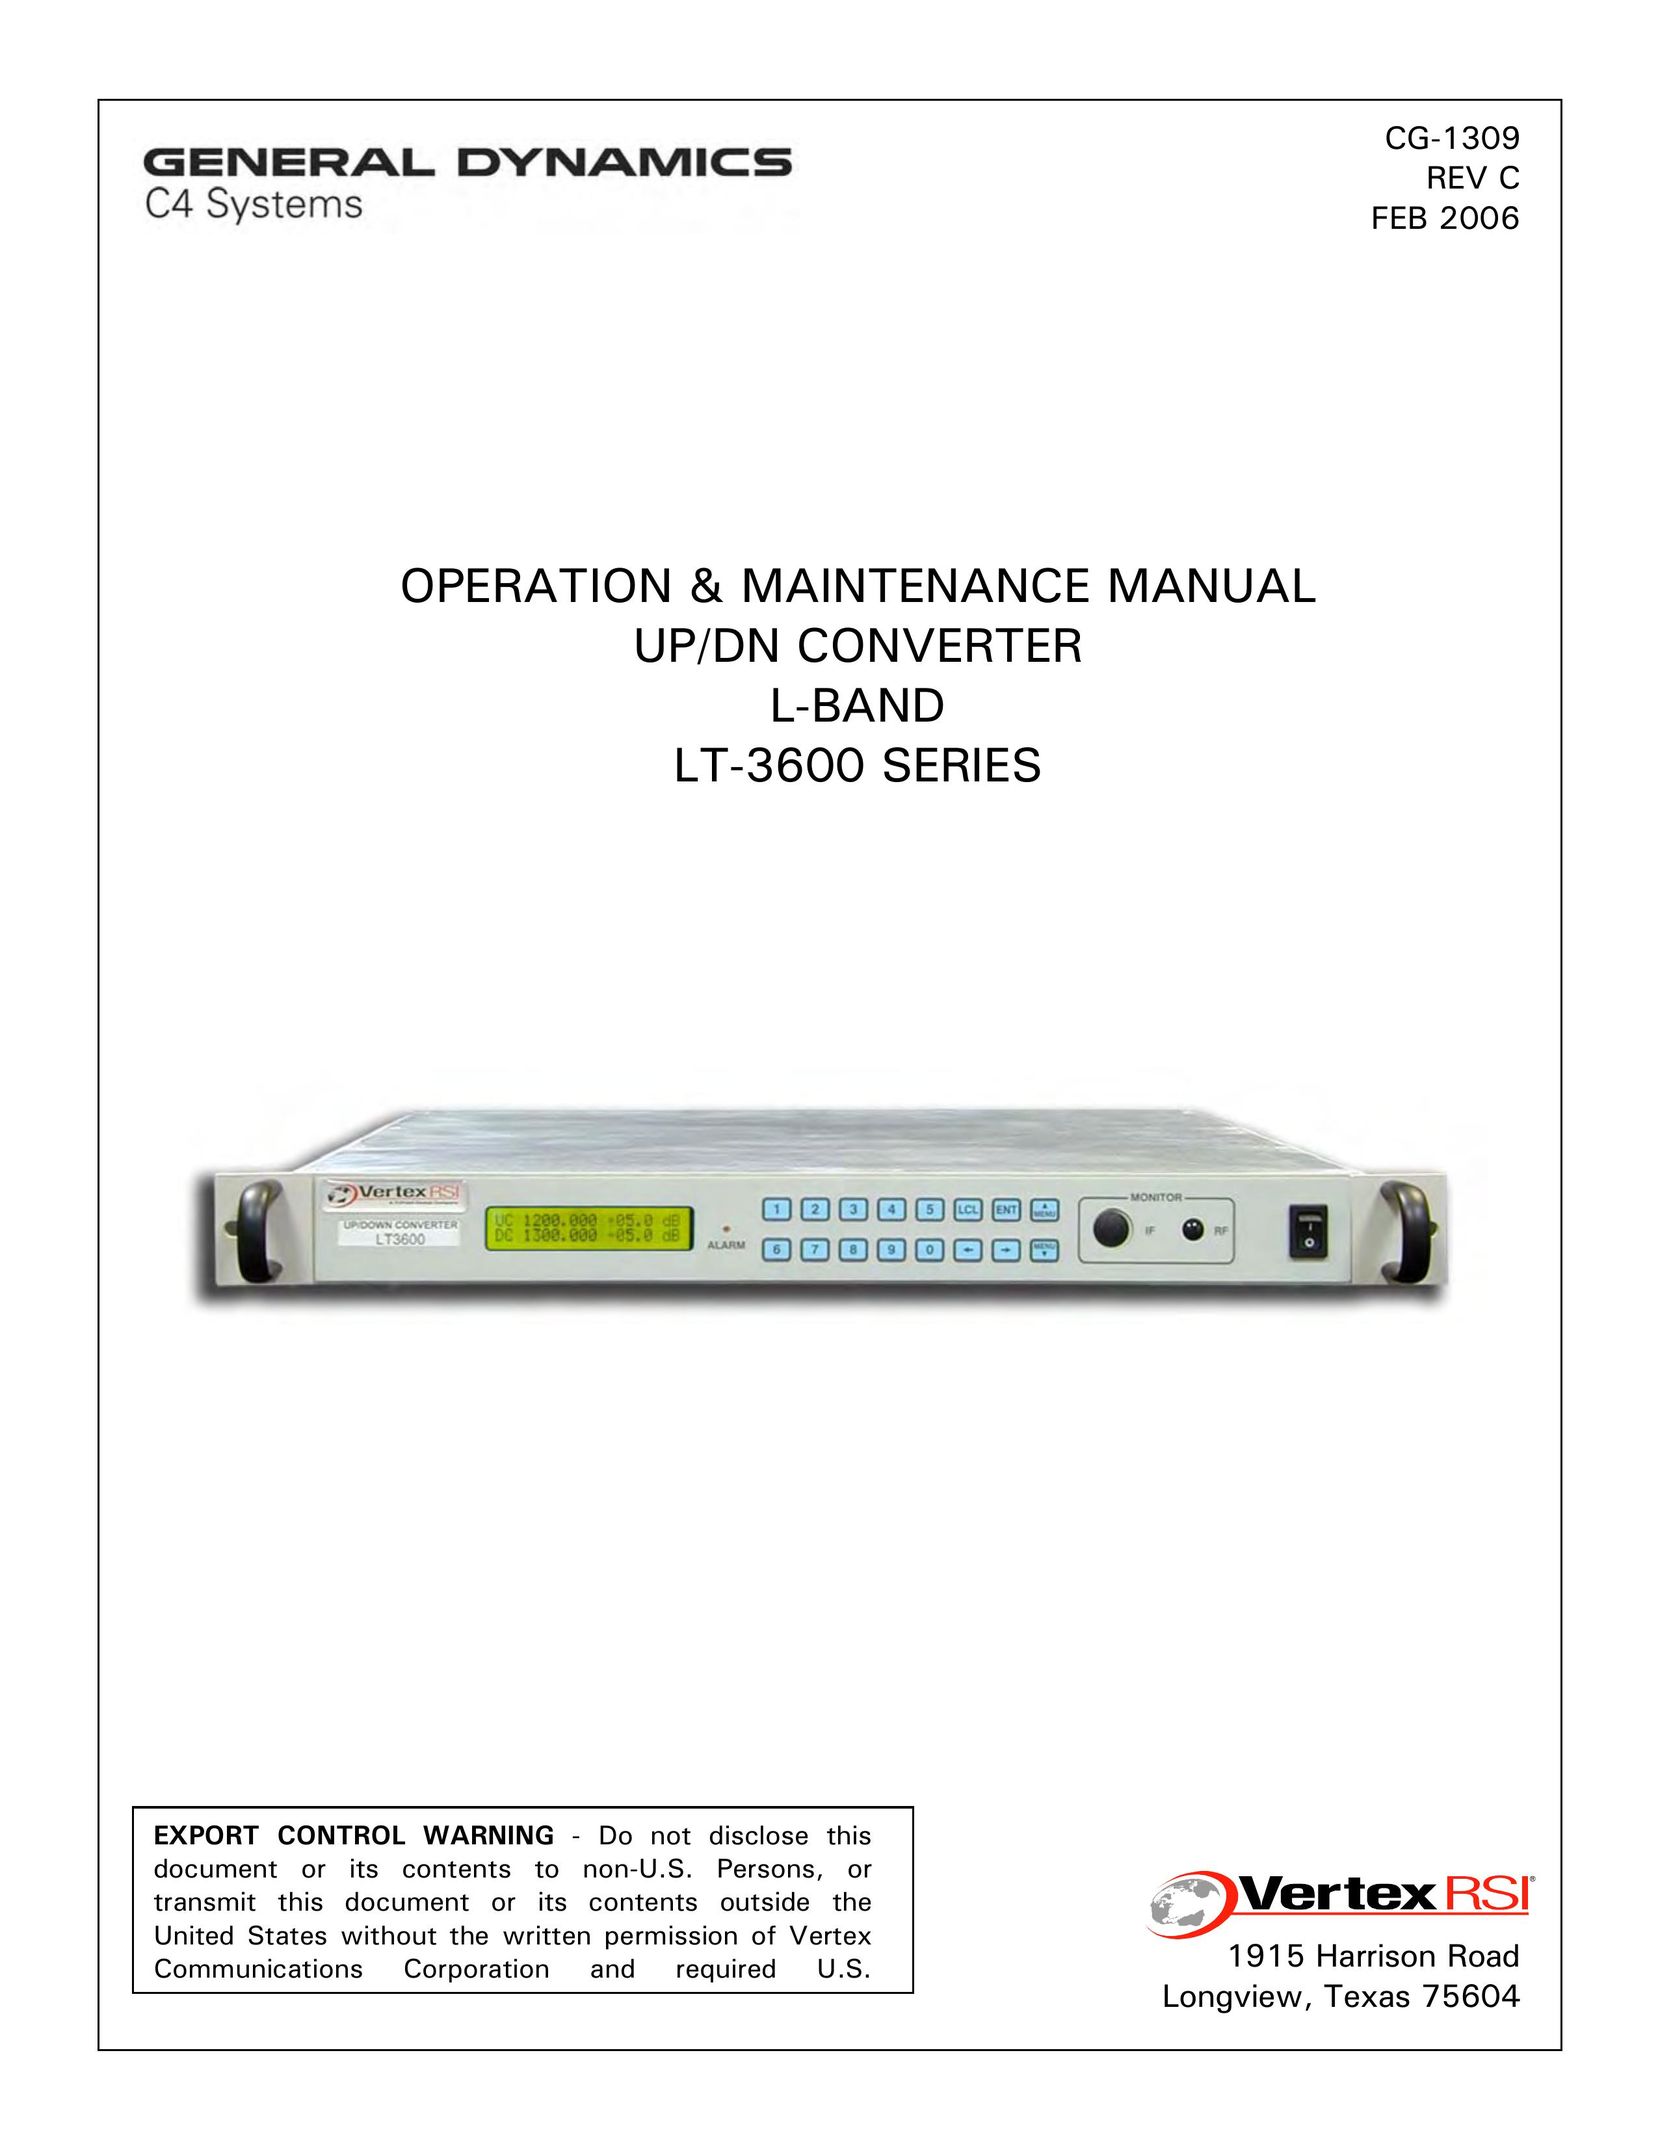 General Dynamics LT-3600 Network Hardware User Manual